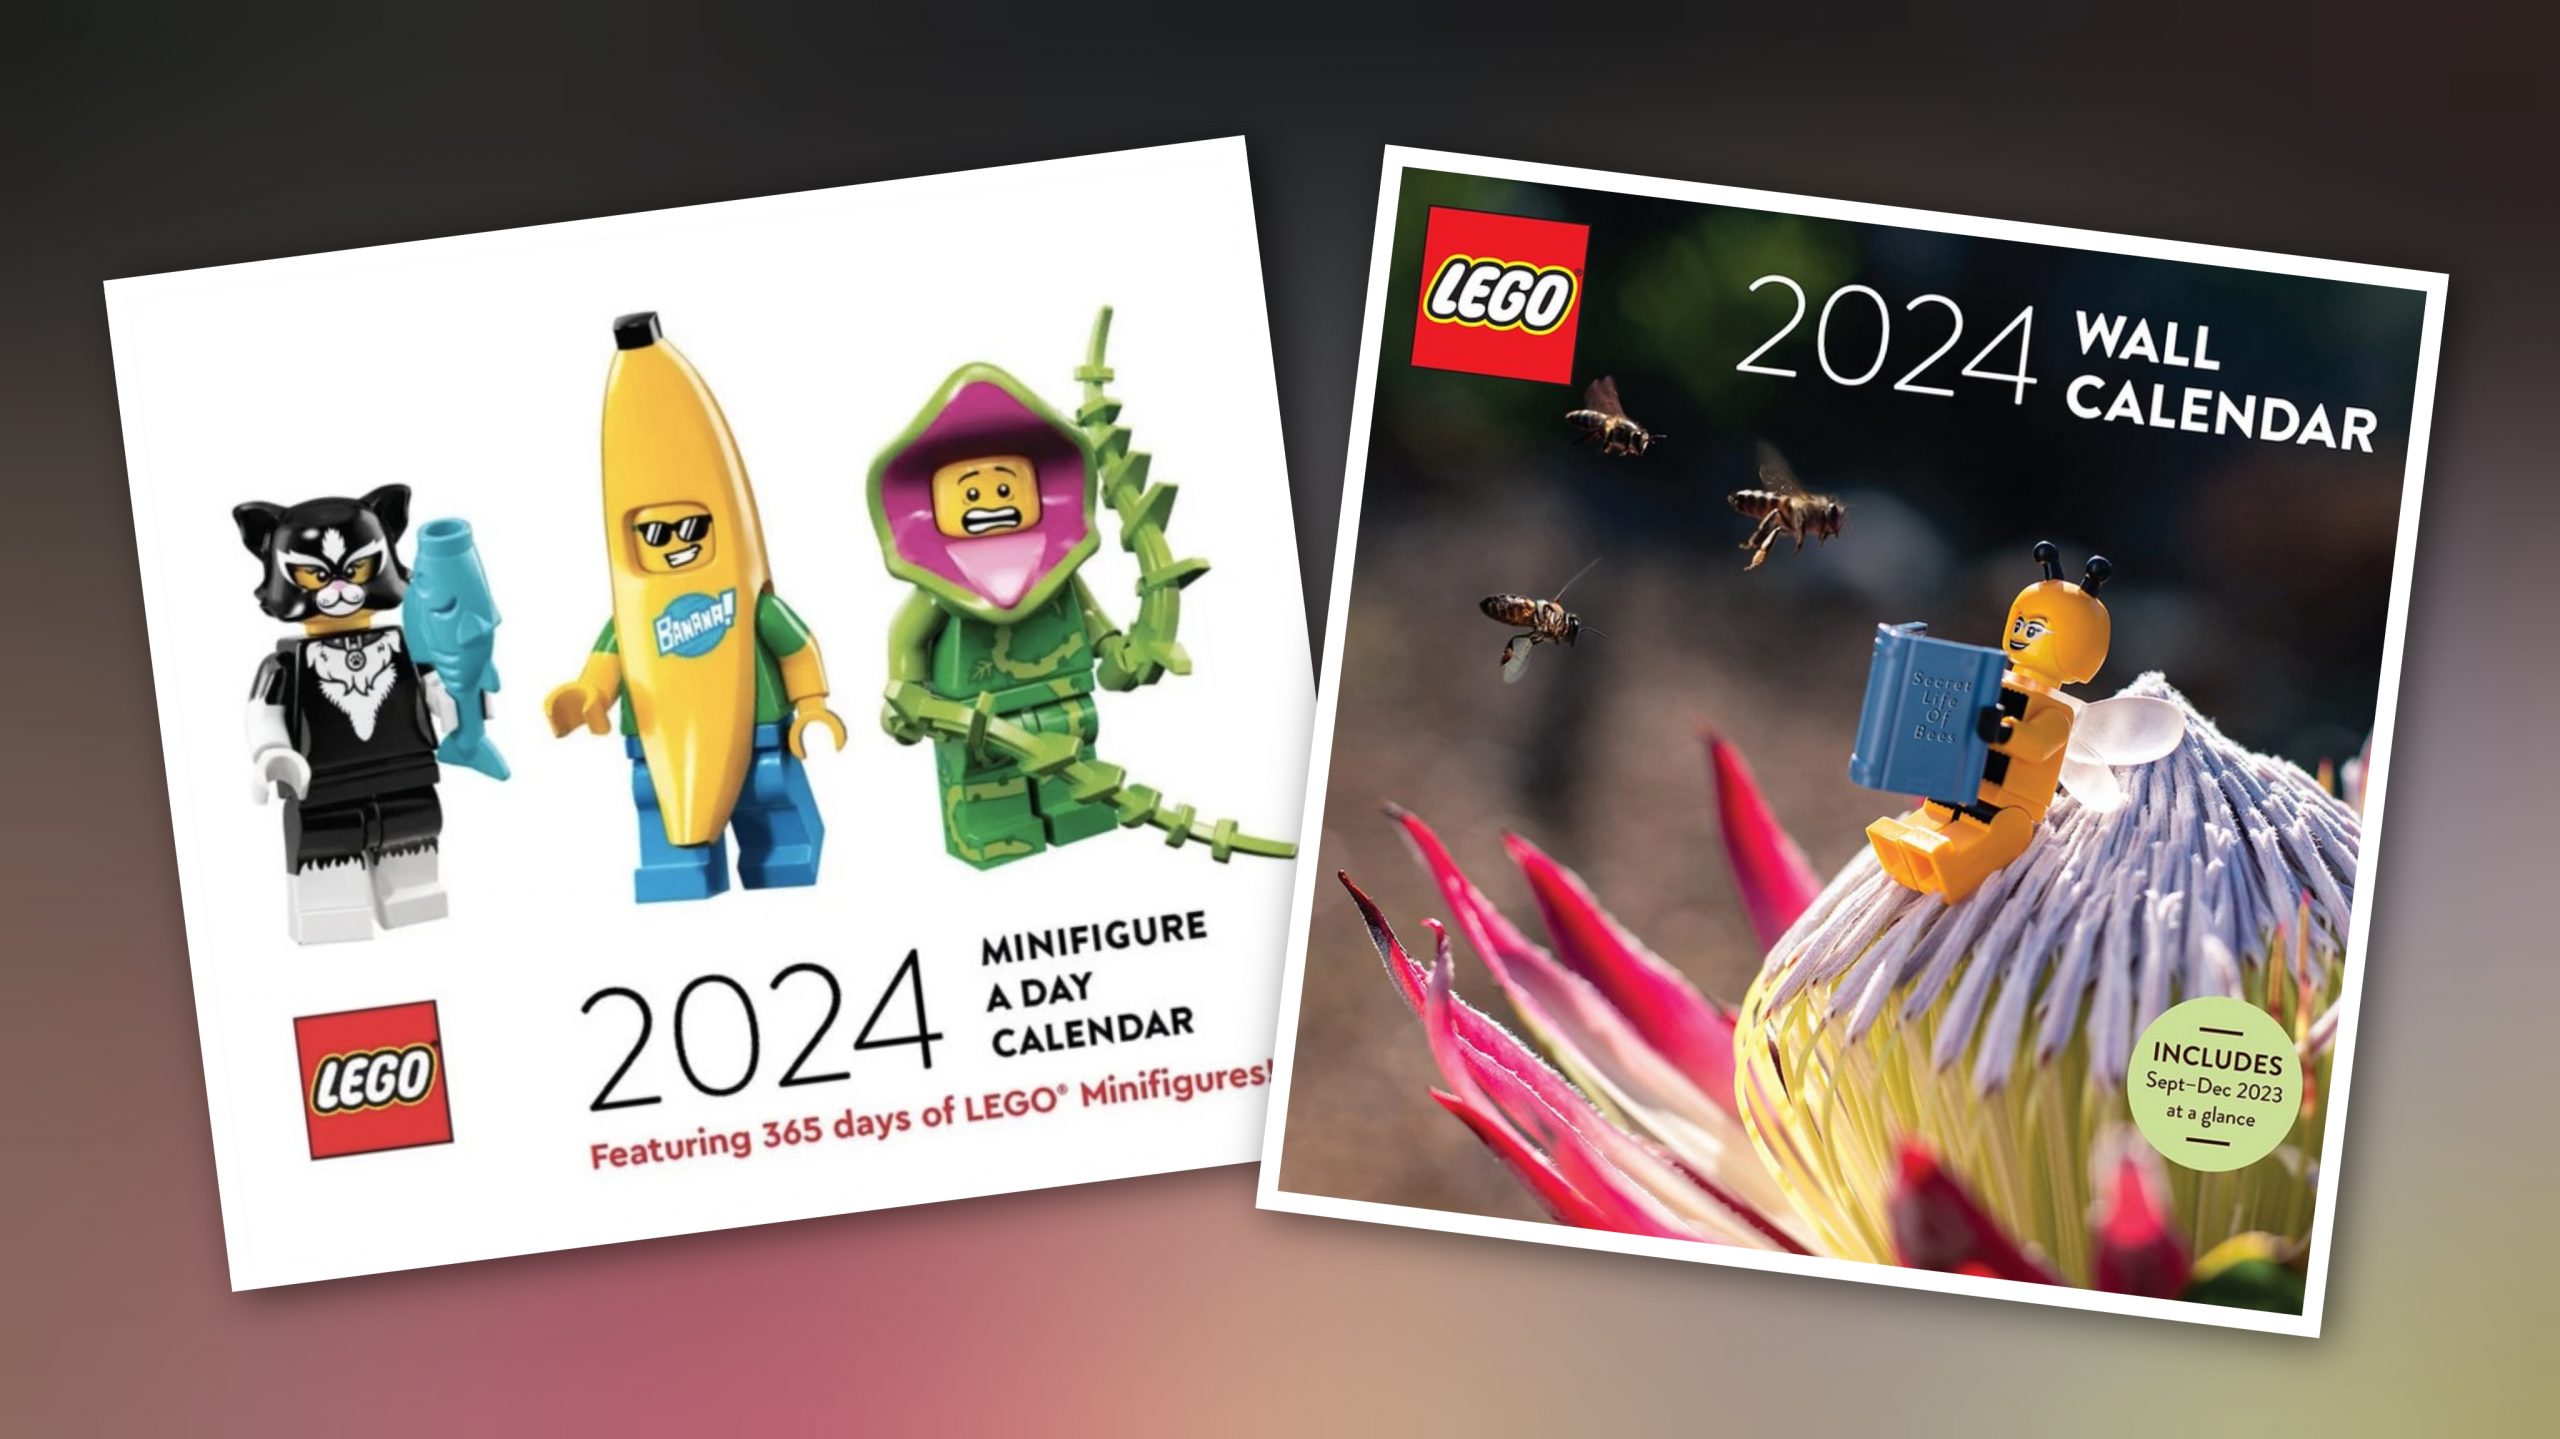 LEGO Minifigure A Day Calendar 2024 The Brick Post 